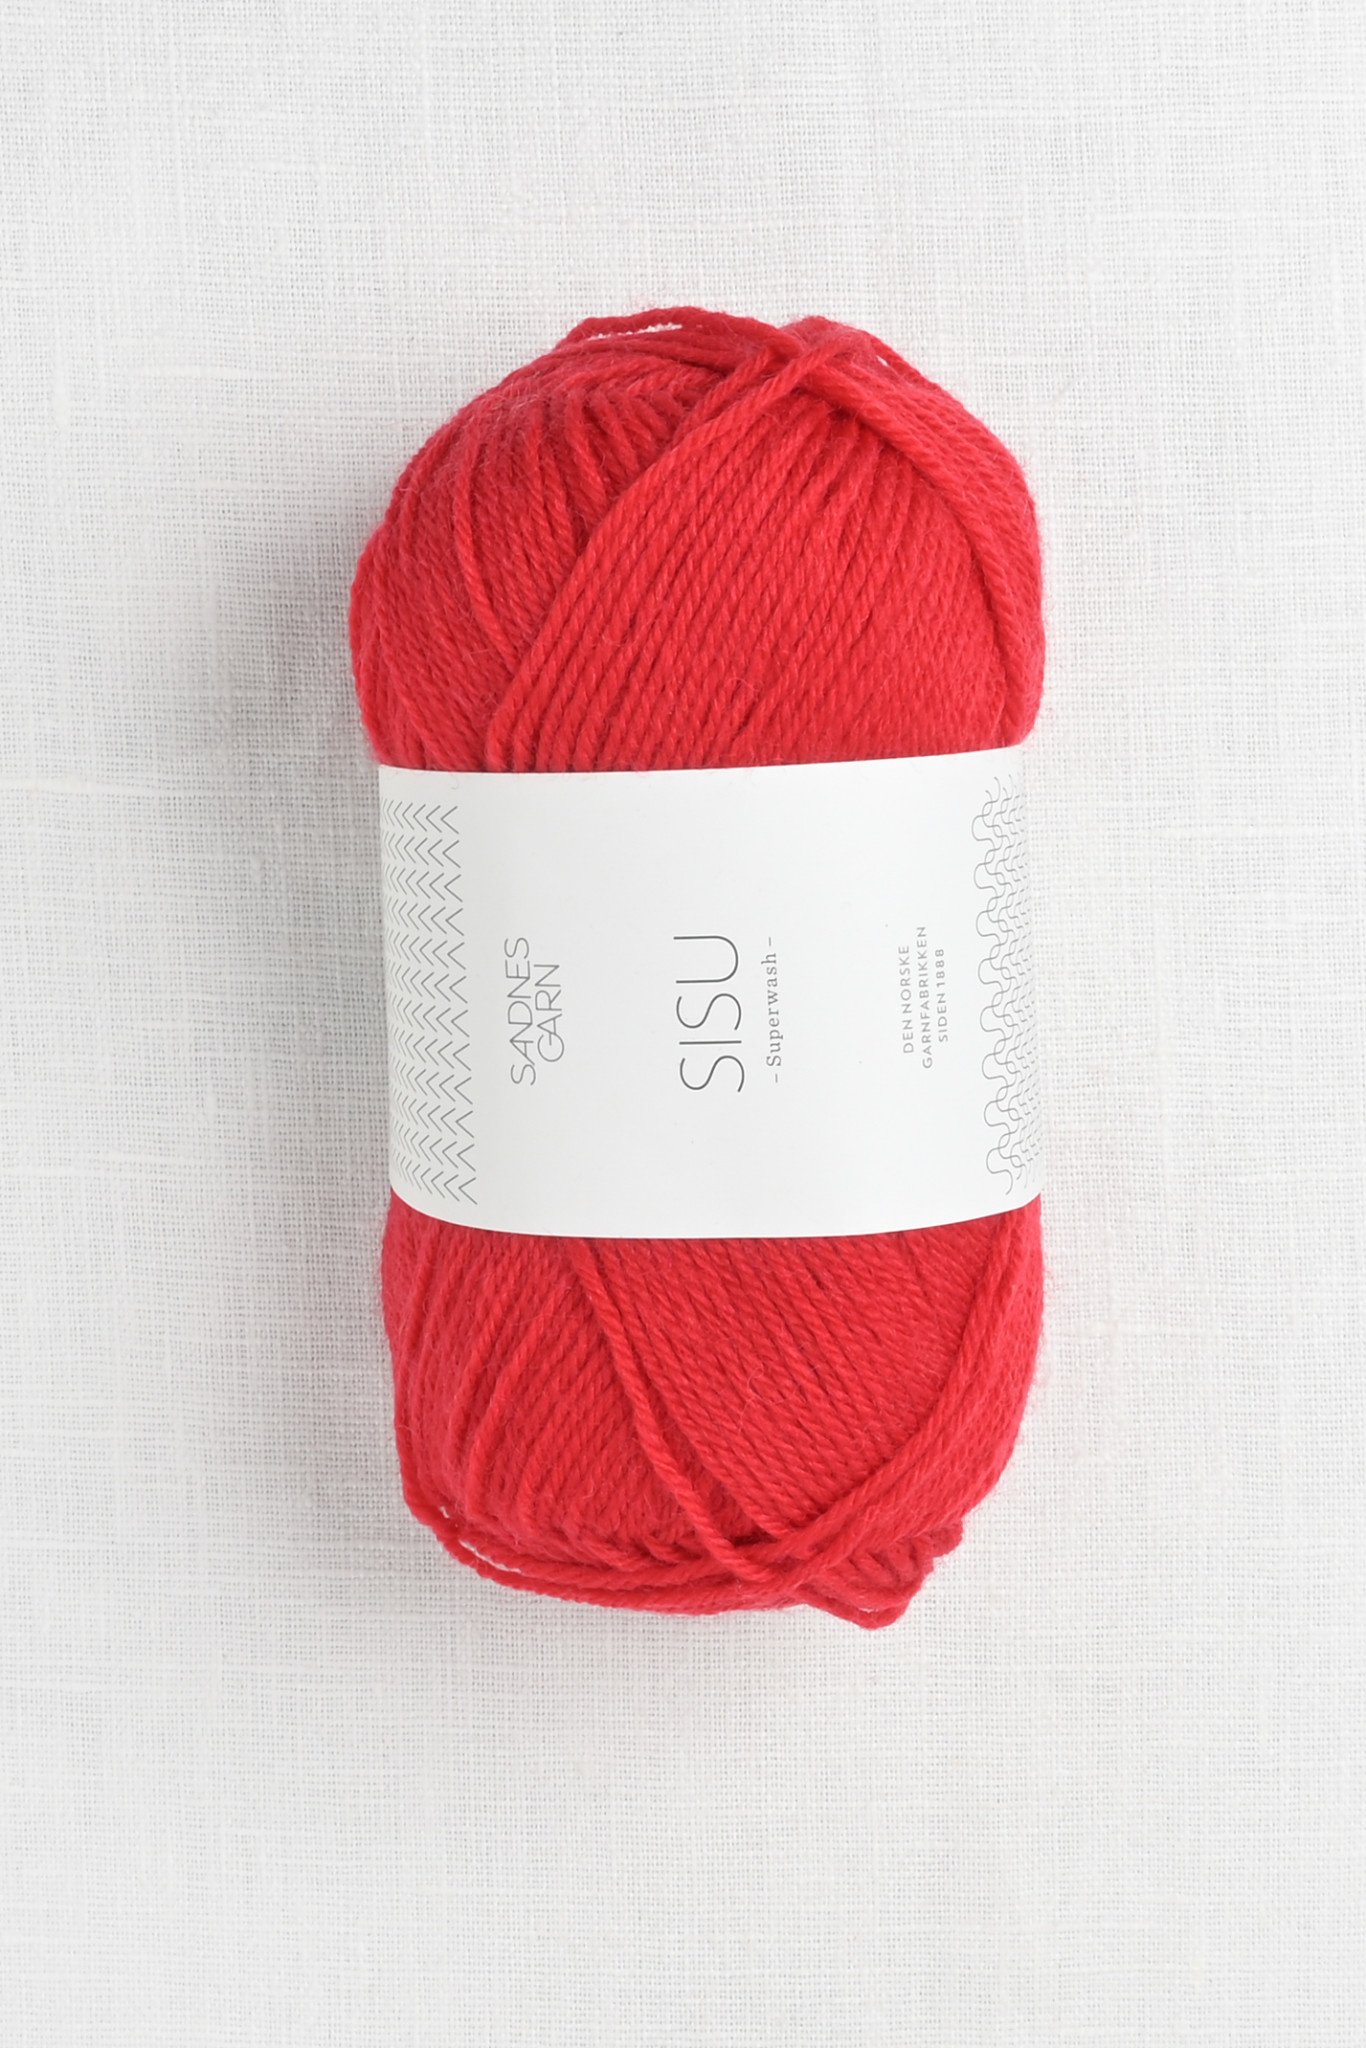 Sandnes Garn Sisu 4219 Red Wool and Company Fine